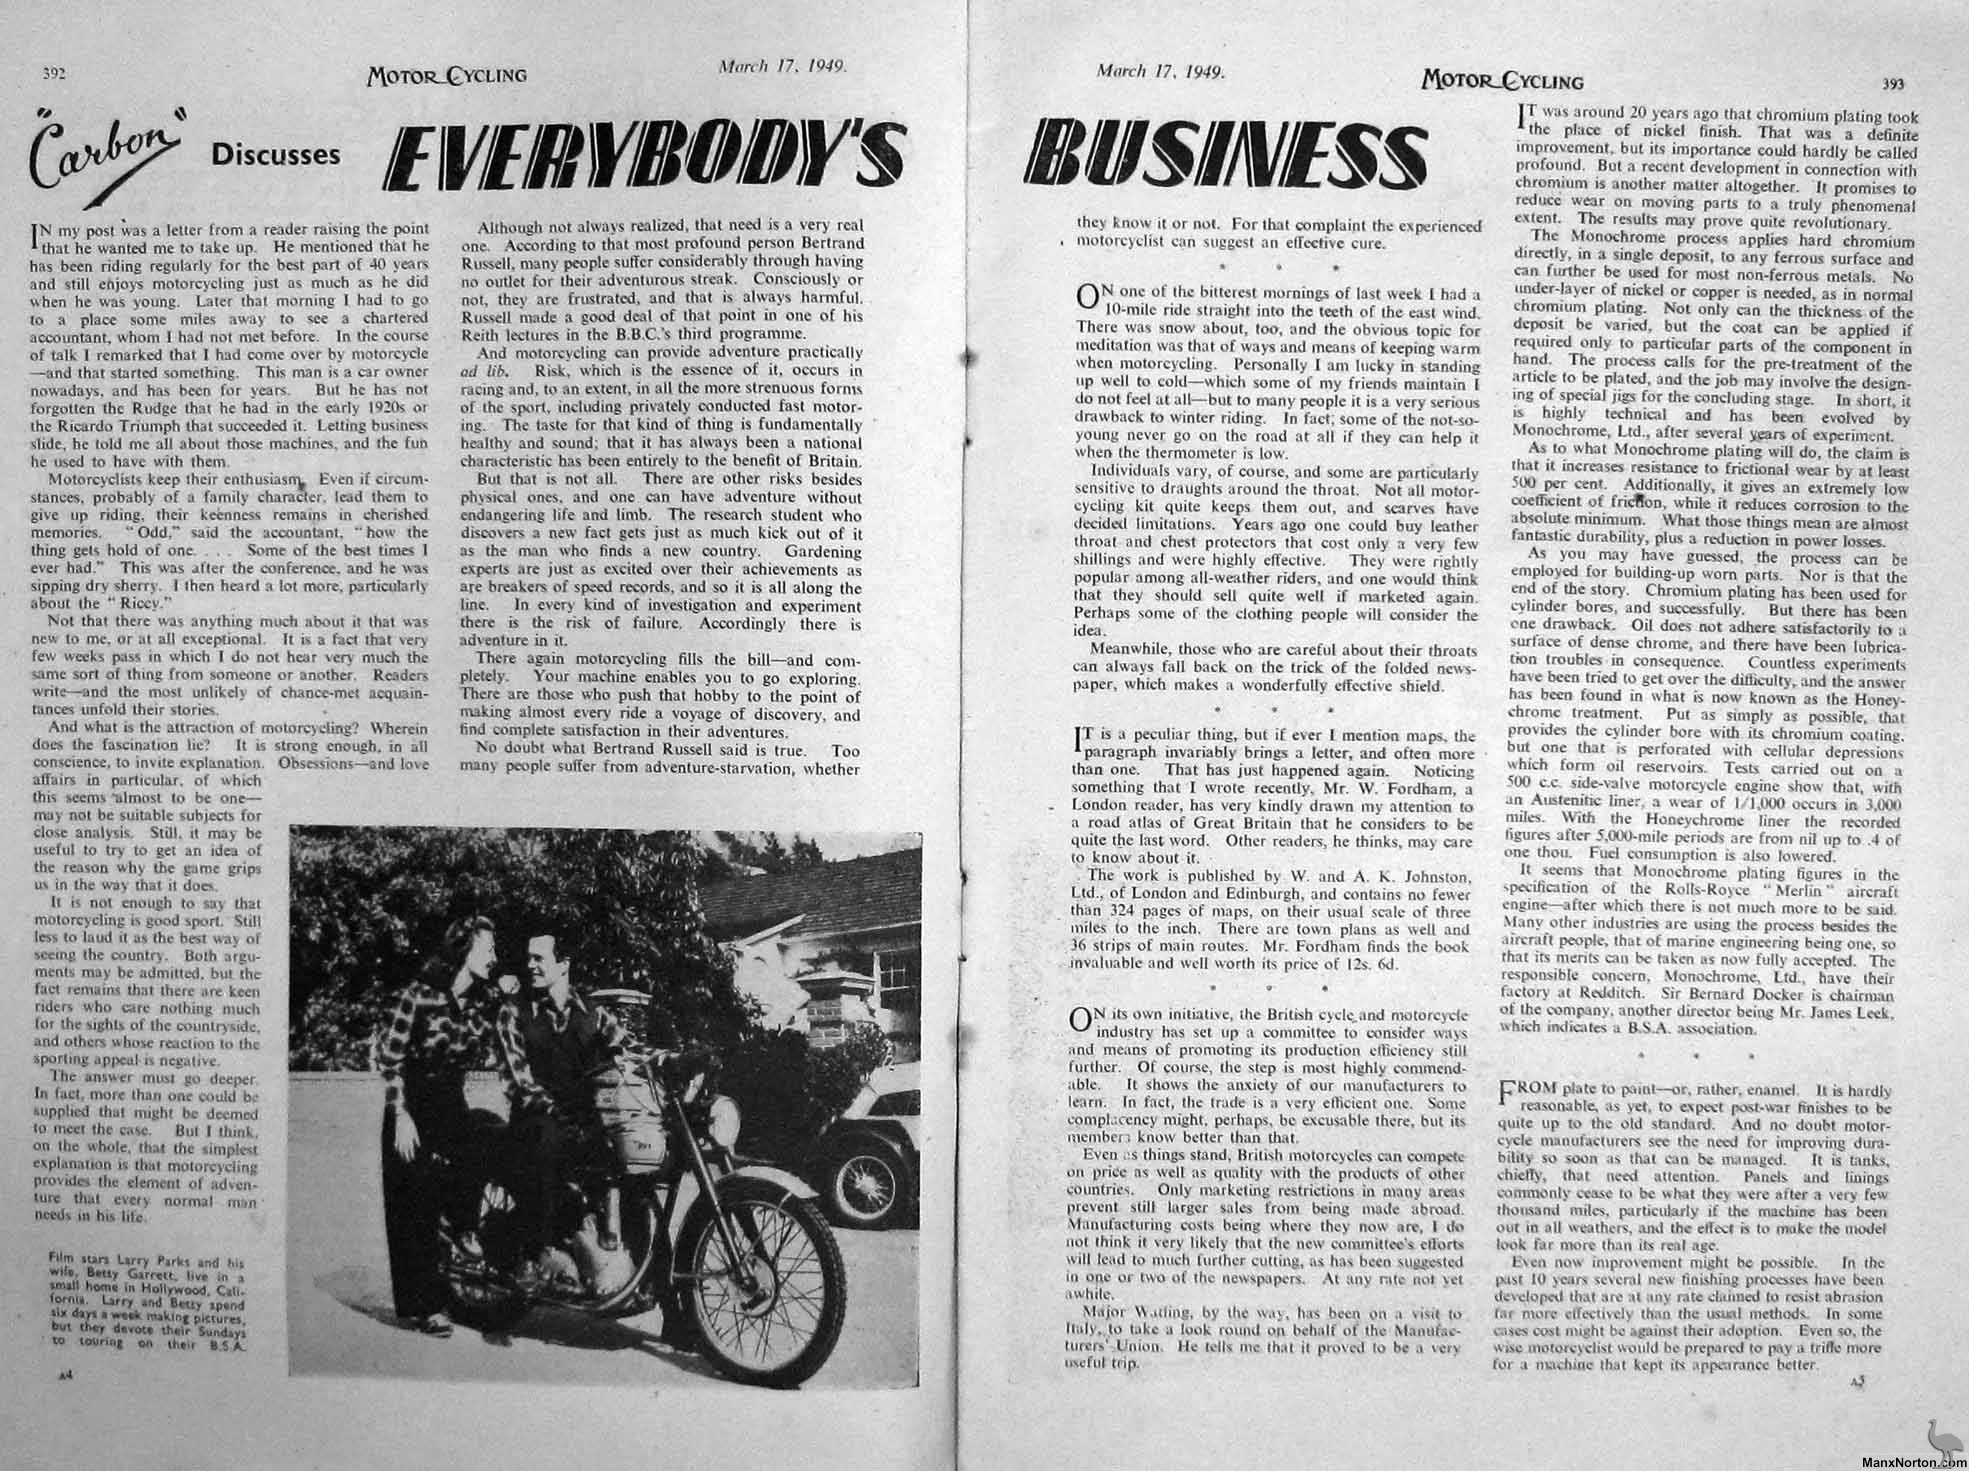 MotorCycling-1949-0317-p392.jpg